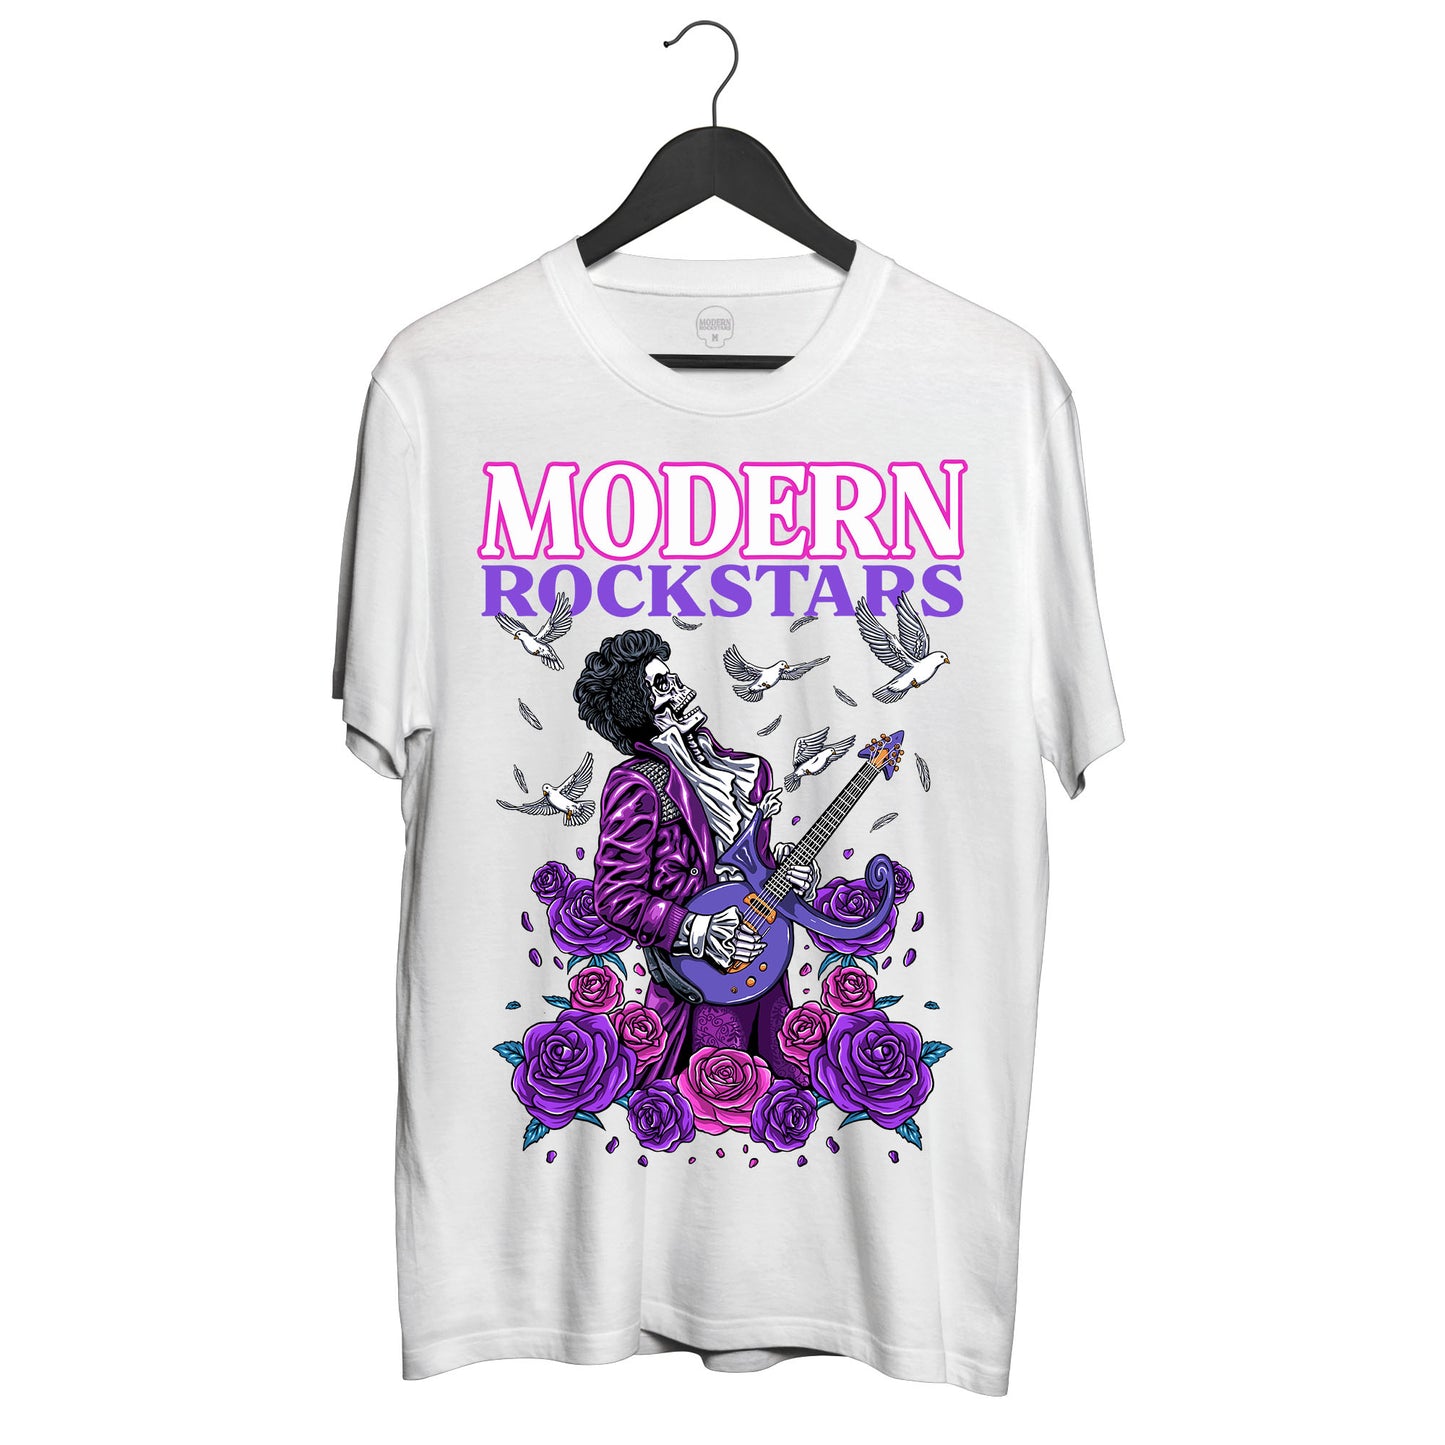 RIP PRINCE T-Shirt - Modern Rockstars